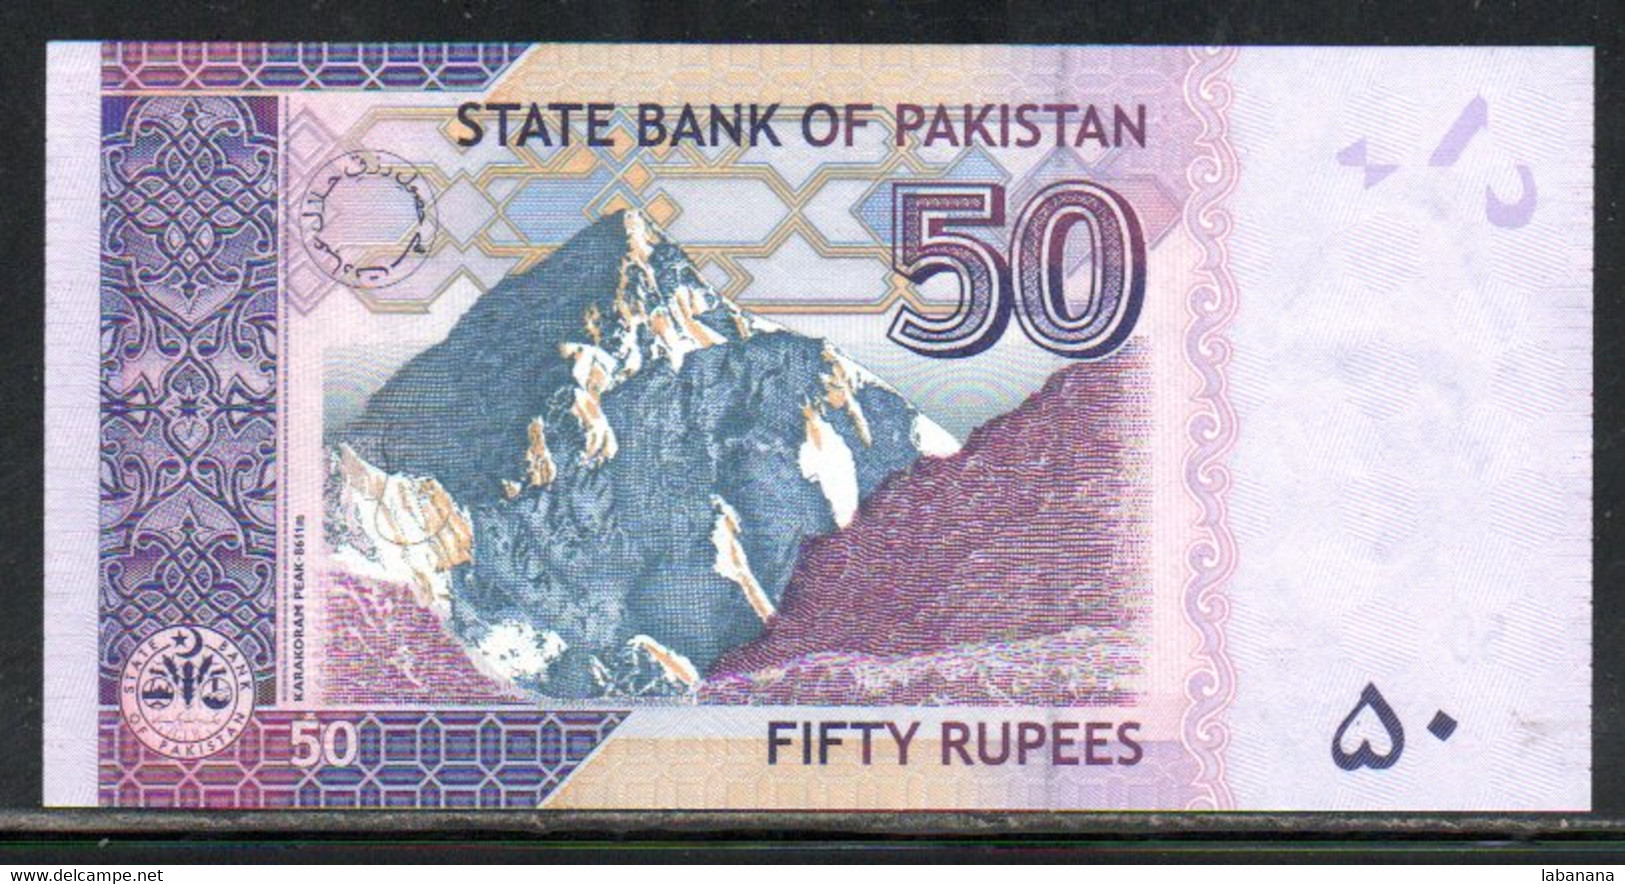 659-Pakistan 50 Rupees 2008 V226 Neuf/unc - Pakistan